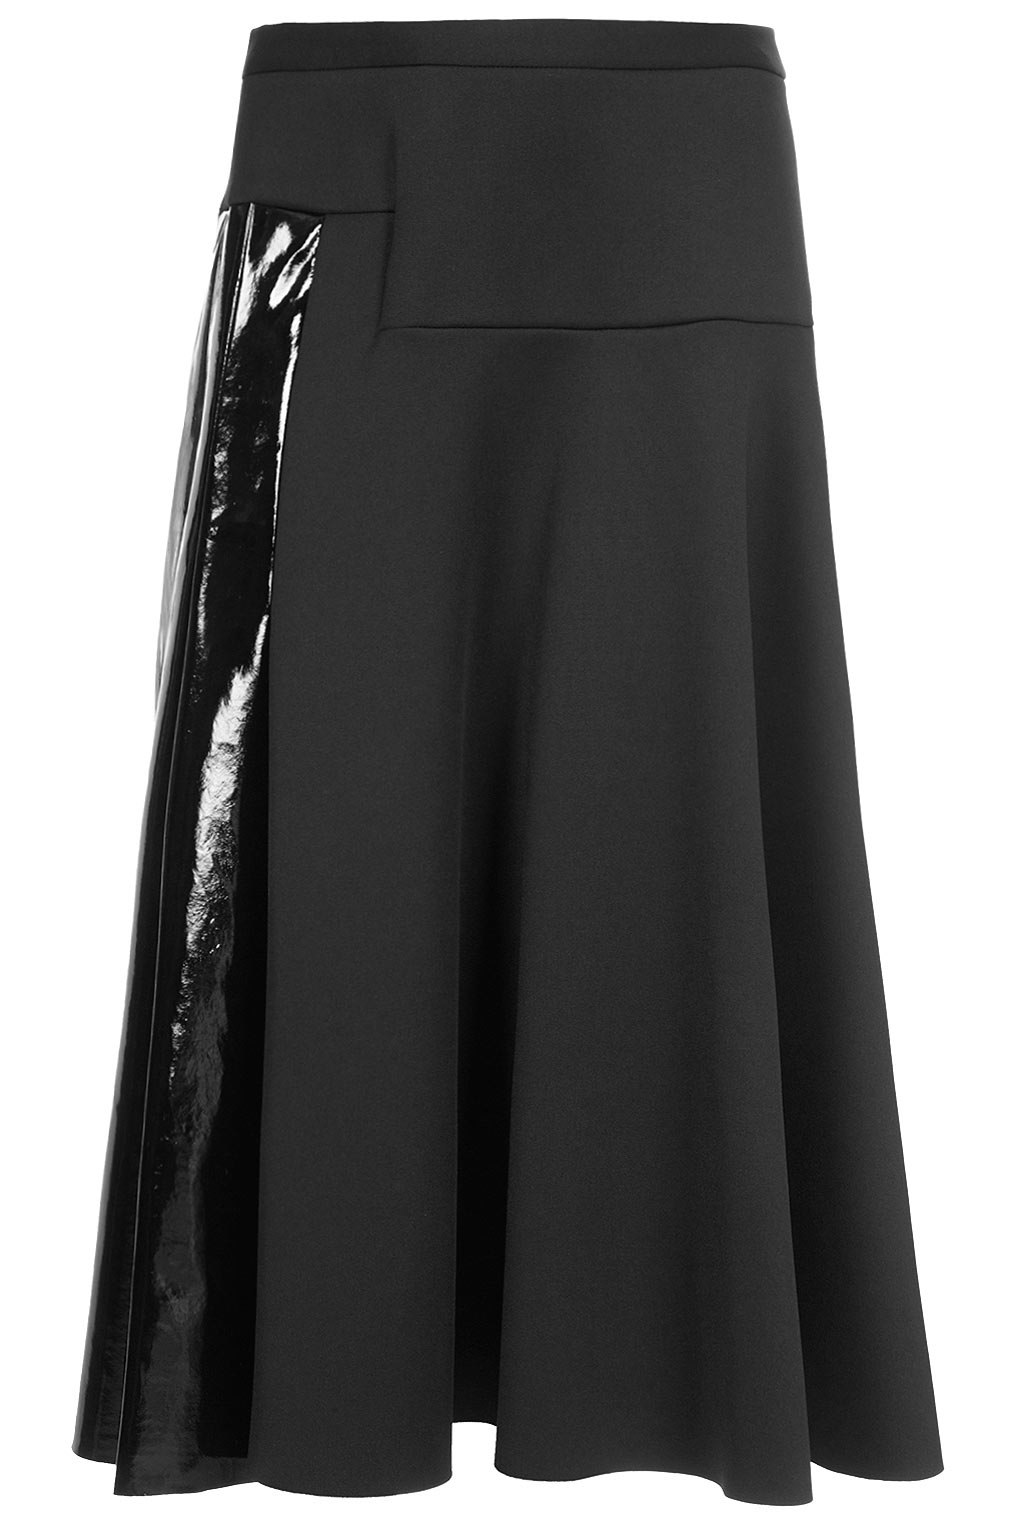 Lyst - Topshop Neoprene Midi Skirt By Unique in Black